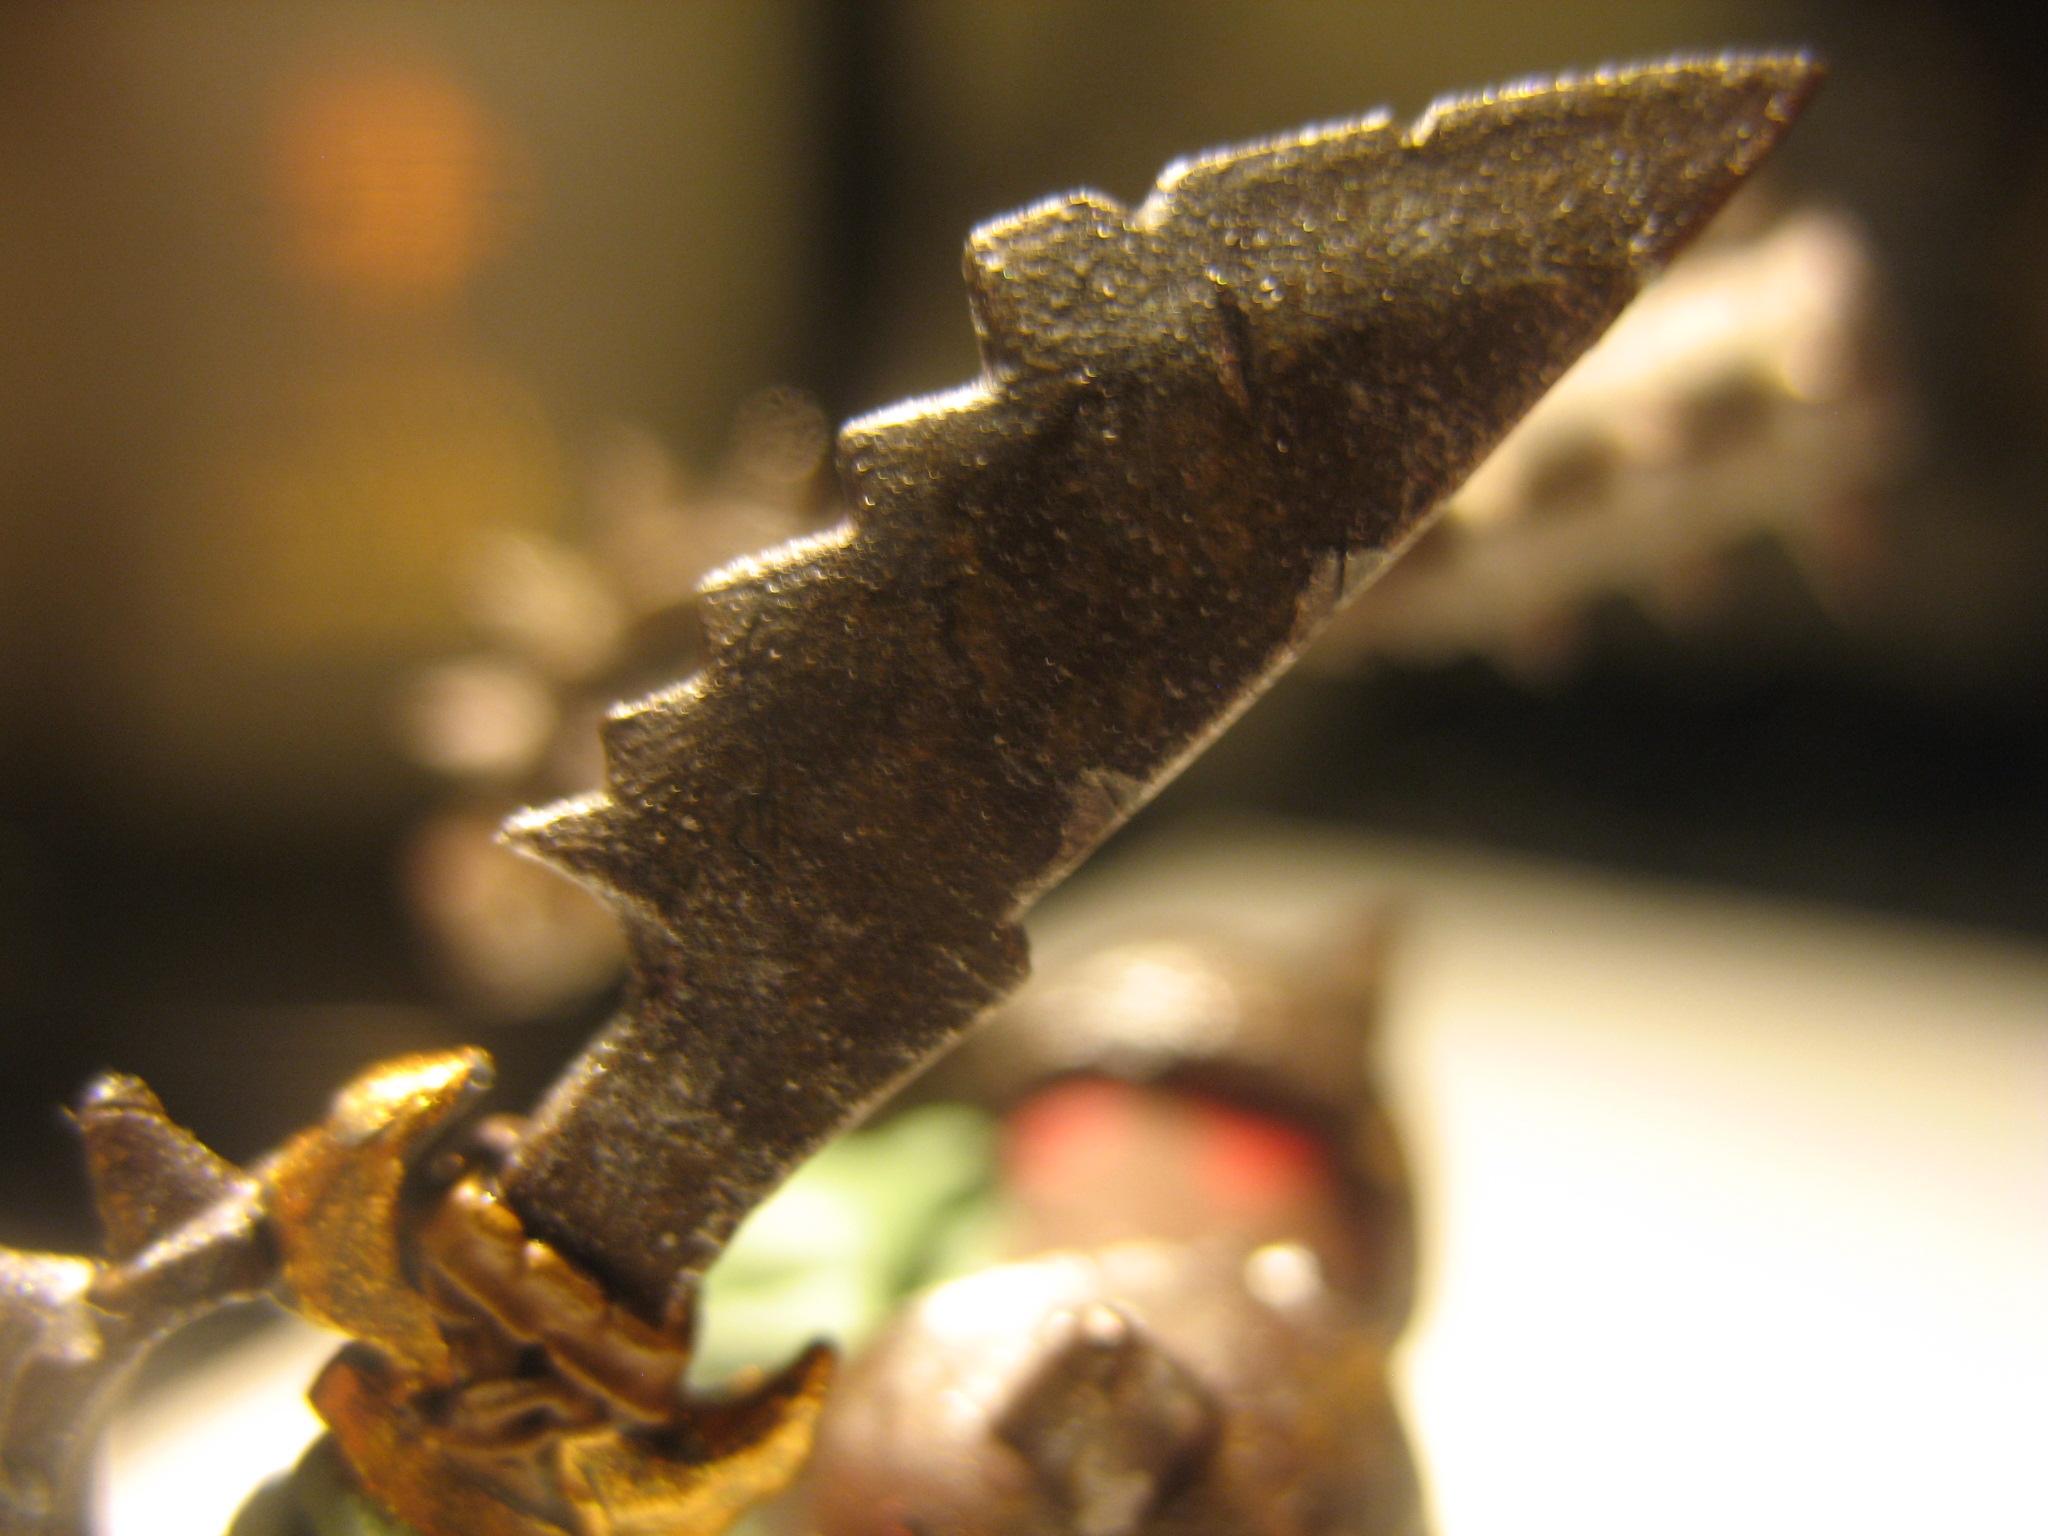 A close-up of the sword